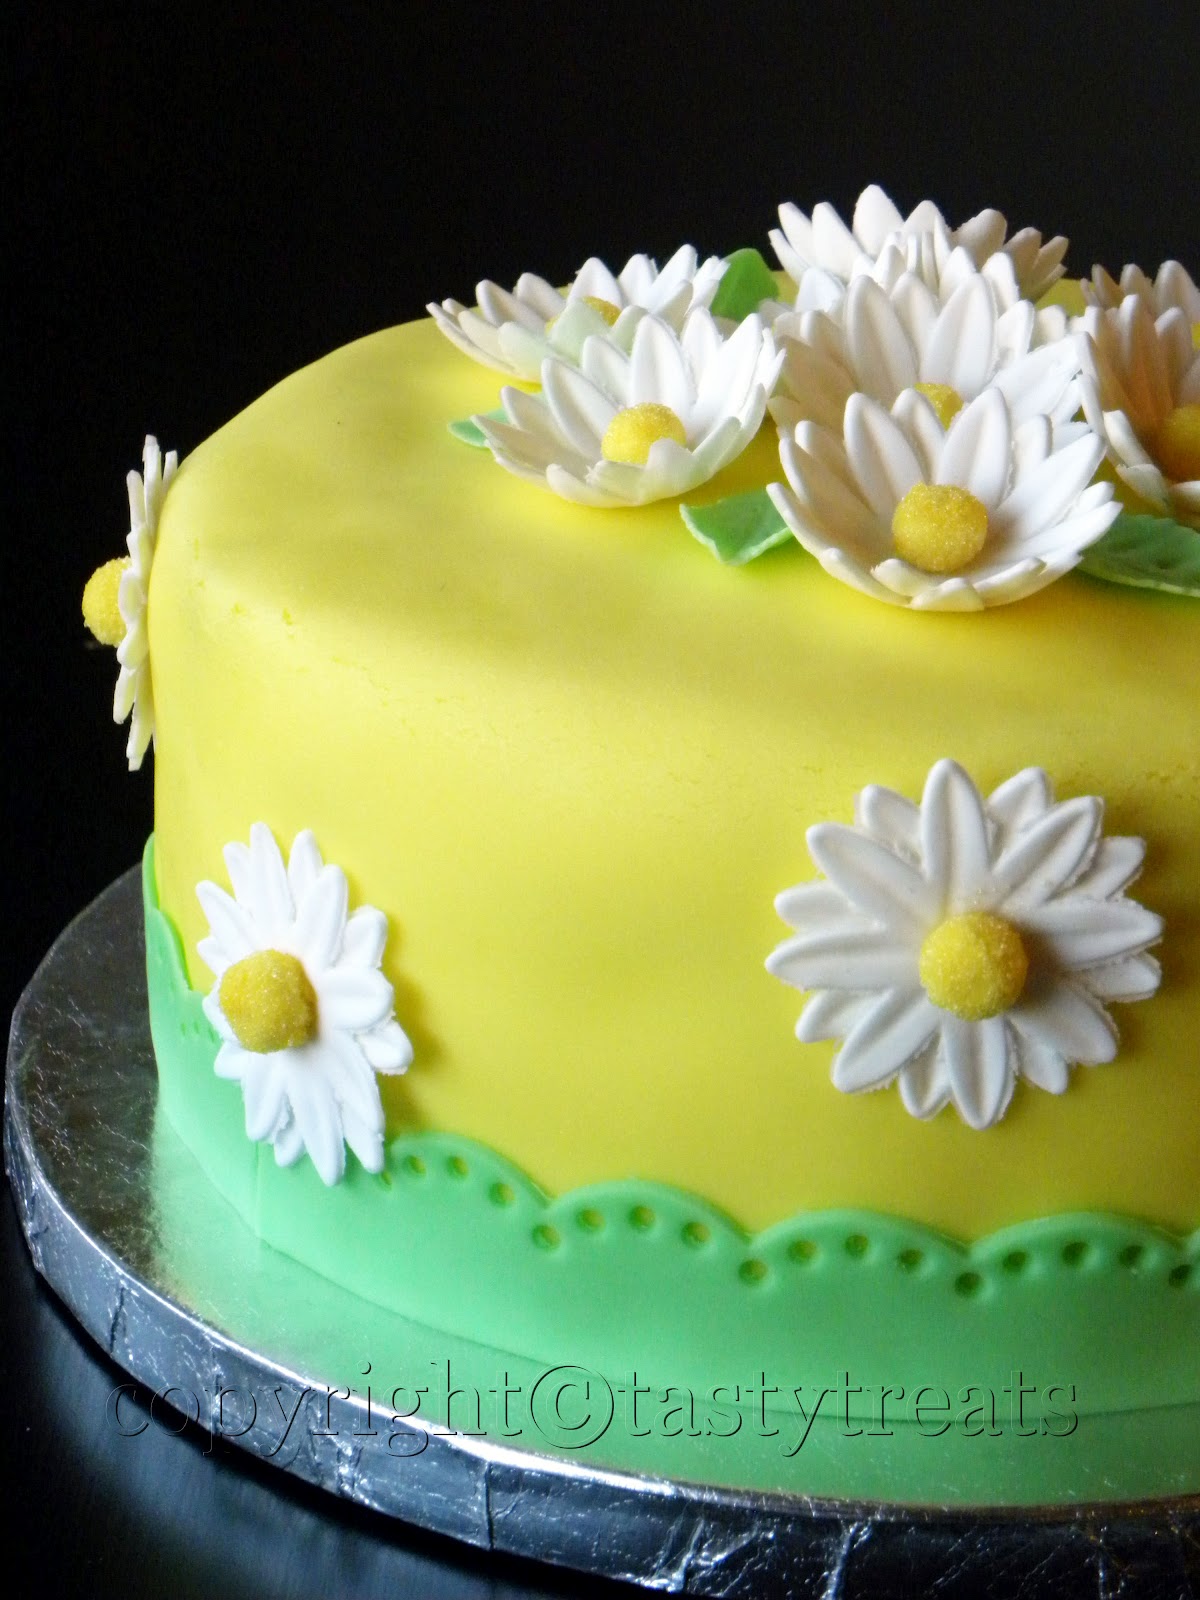 How to Make Fondant Flowers, Wilton's Baking Blog